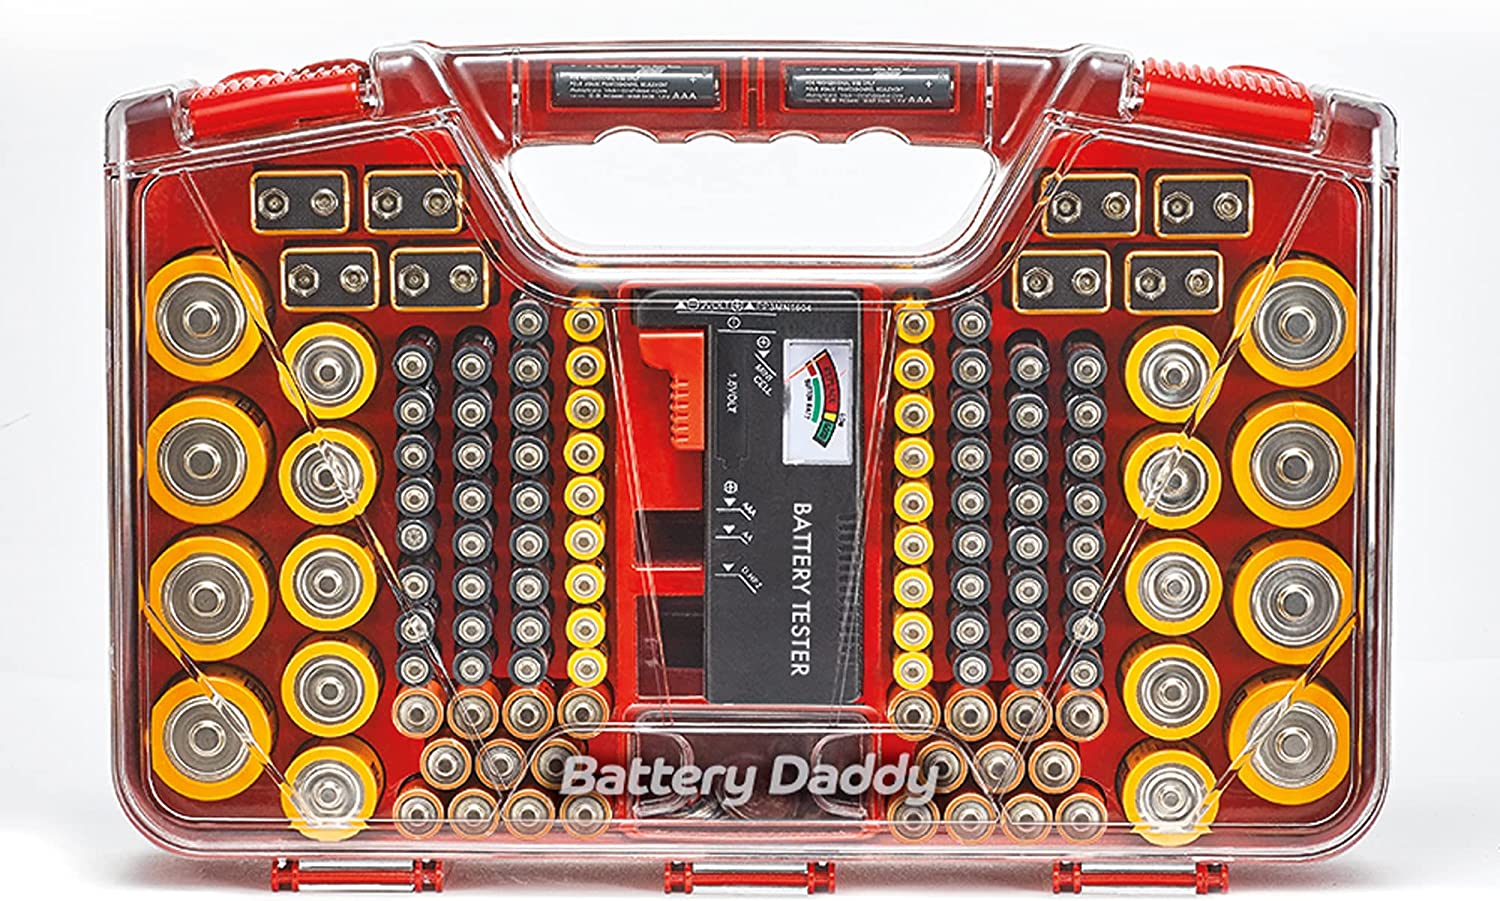 Battery daddy solupiles compact avec poignee de transport et